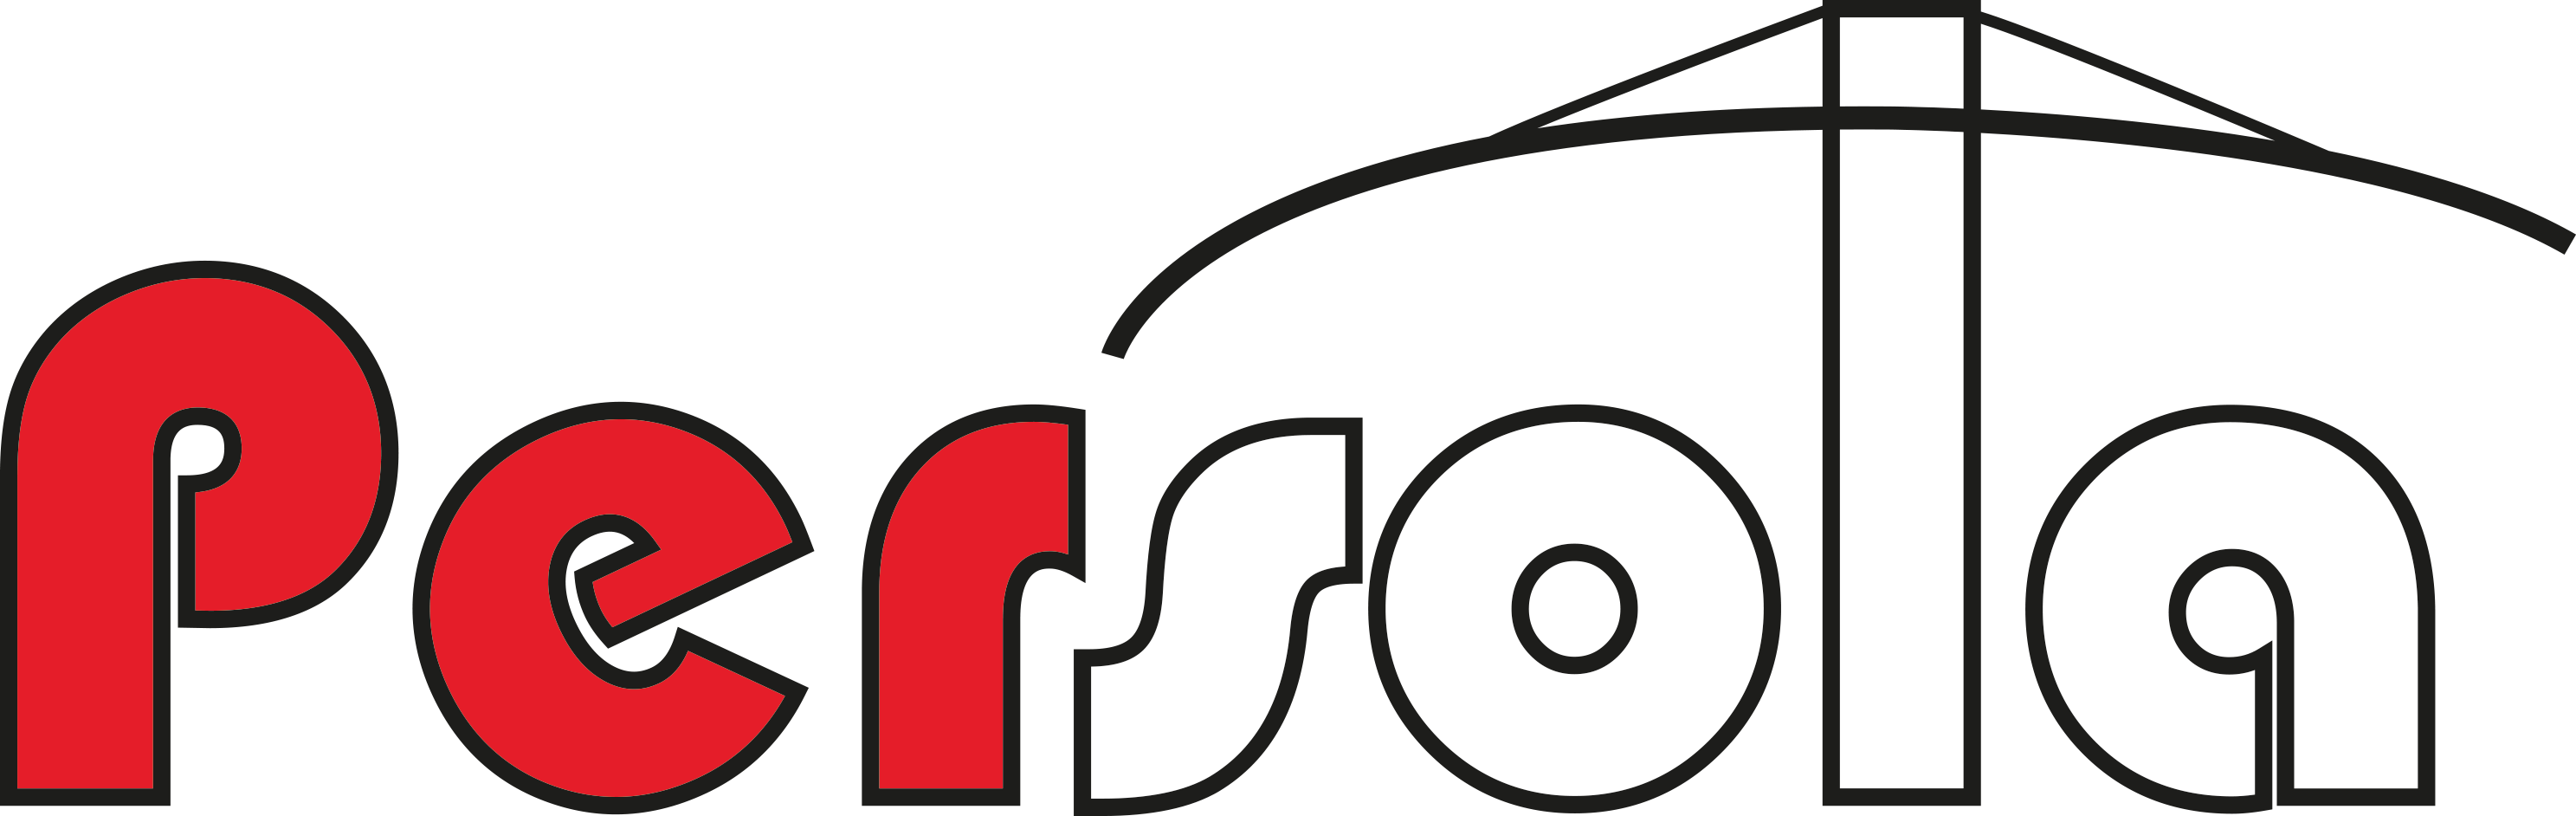 Persola logo